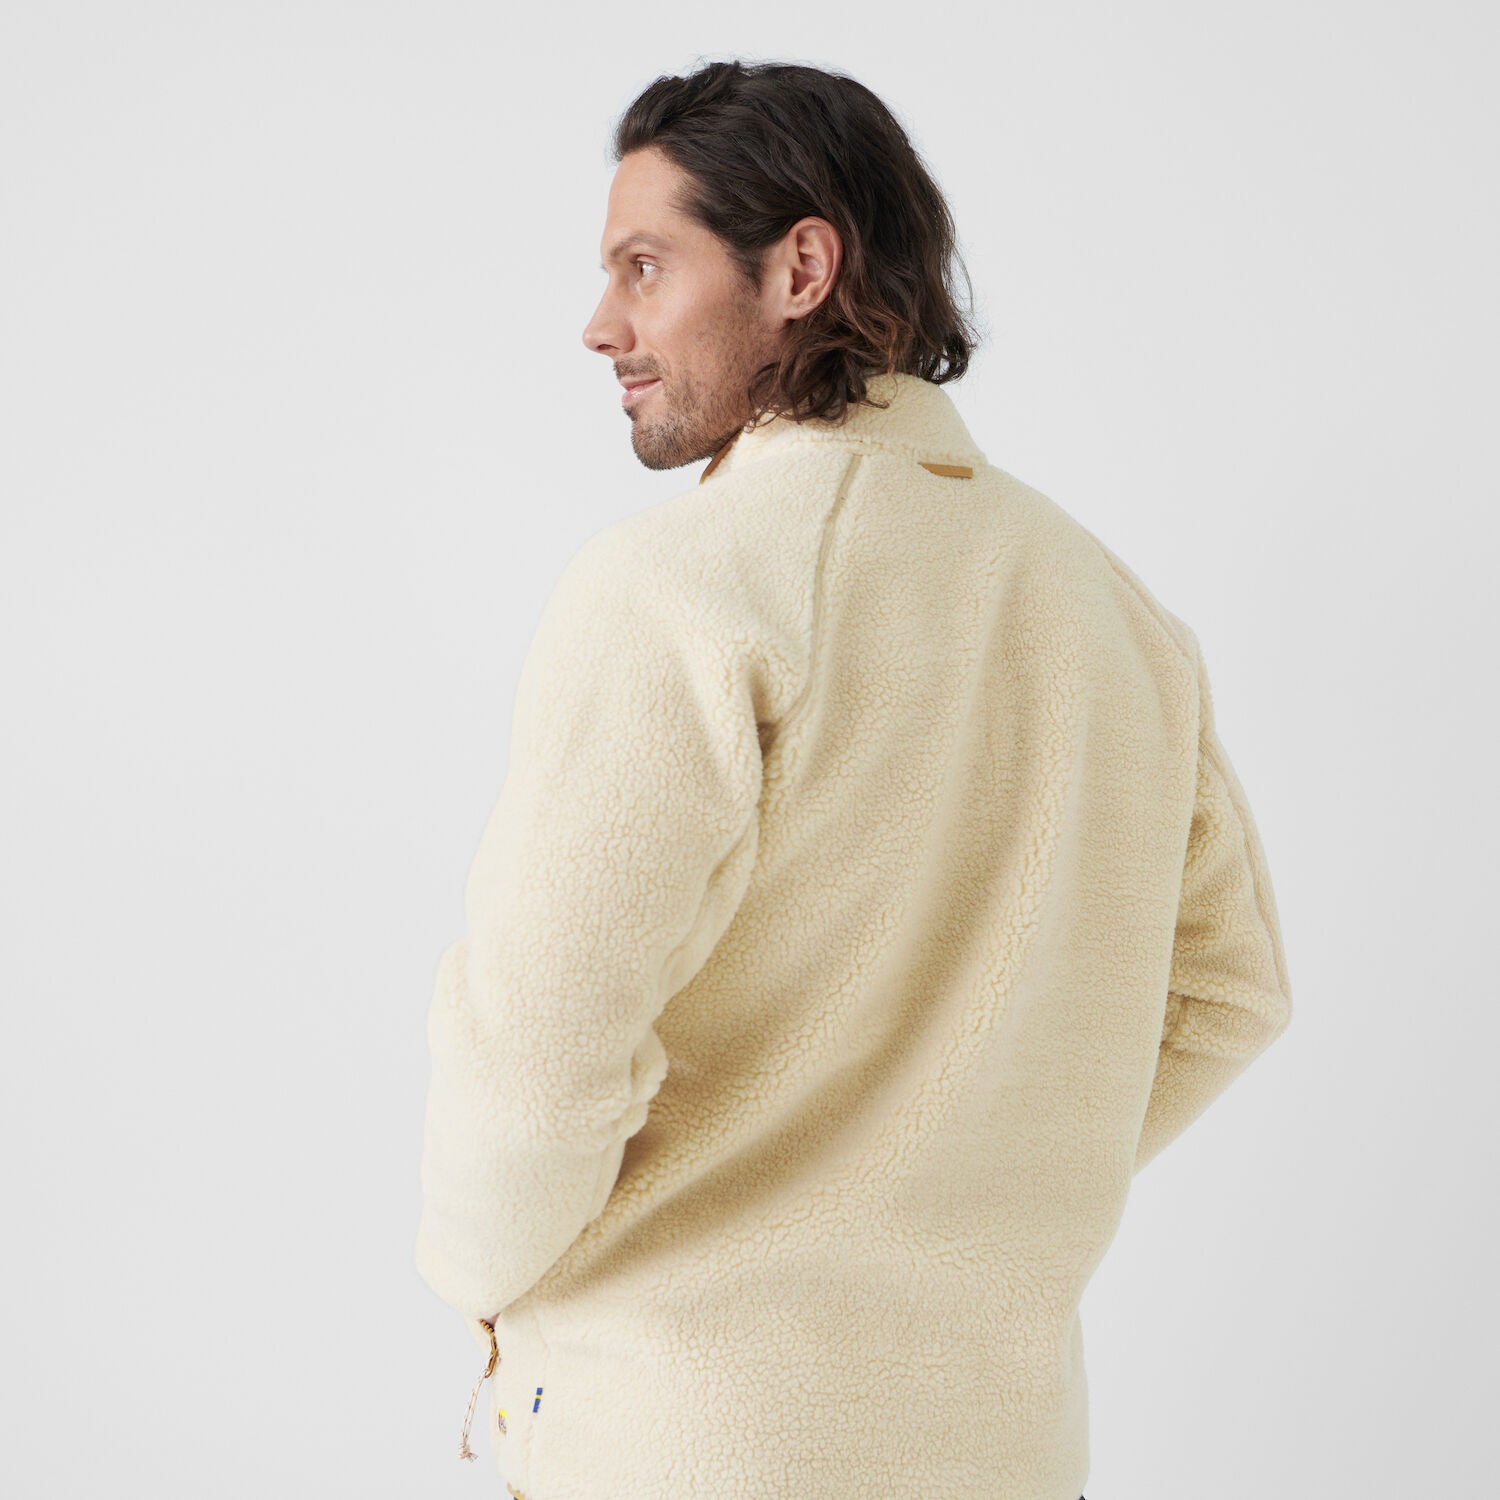 Fjällräven M's Vardag Pile Fleece - Recycled Polyester Chalk White Jacket